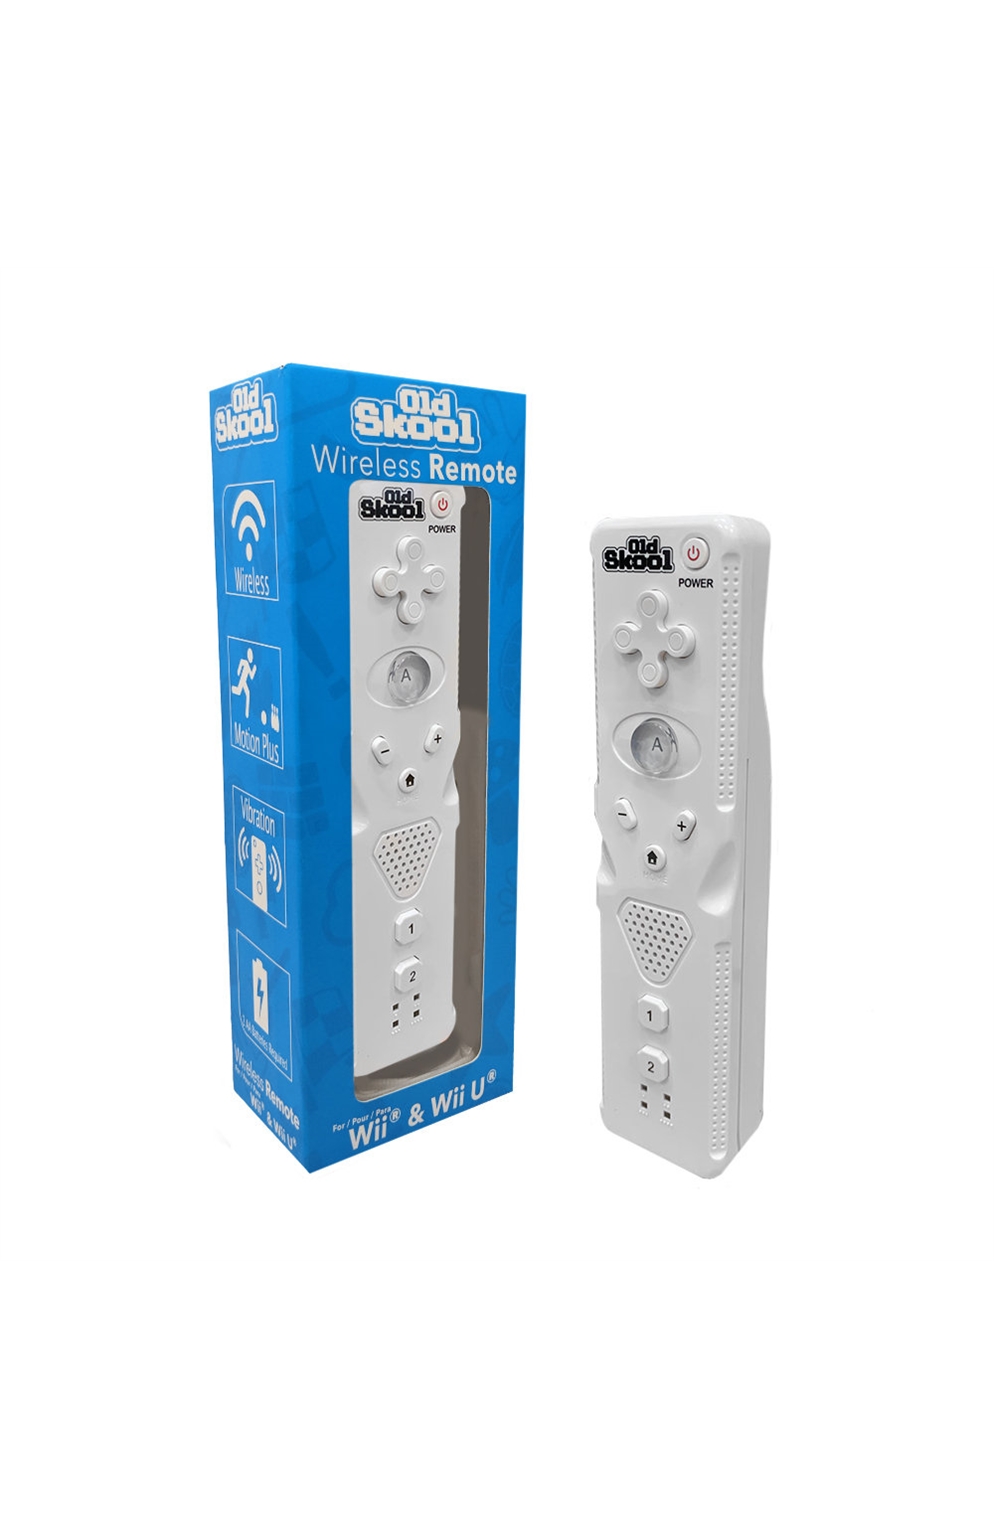 Wireless Remote For Wii & Wii U - White